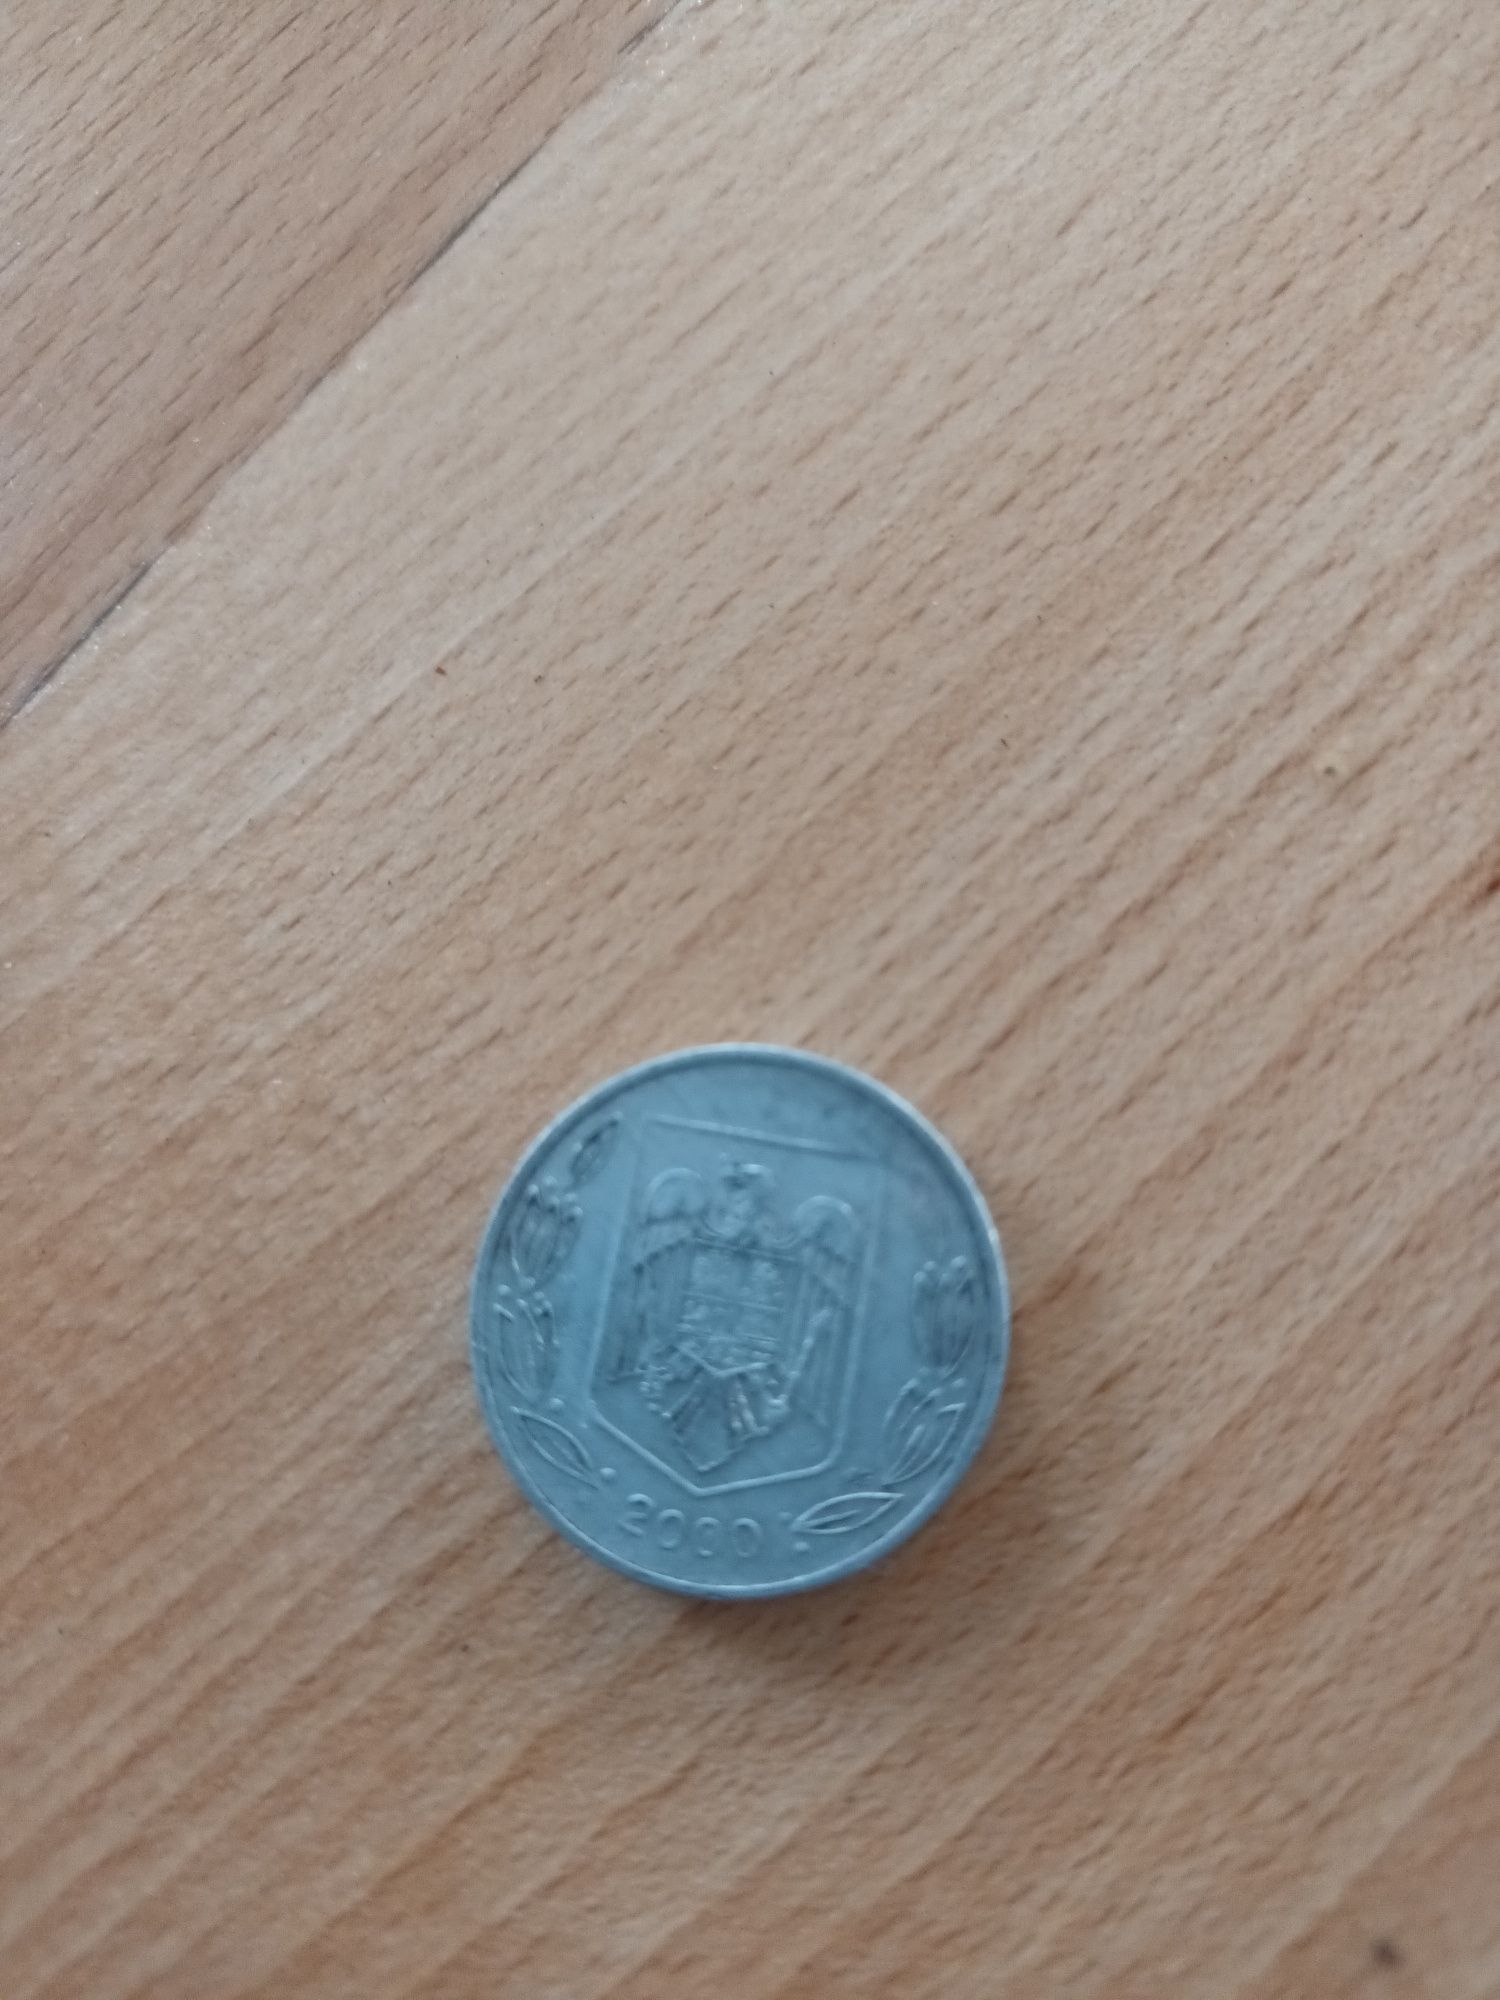 Vând Monede 100 Leu din 1992 Mihai Viteazu ṣi 500 Leu din anul 2000